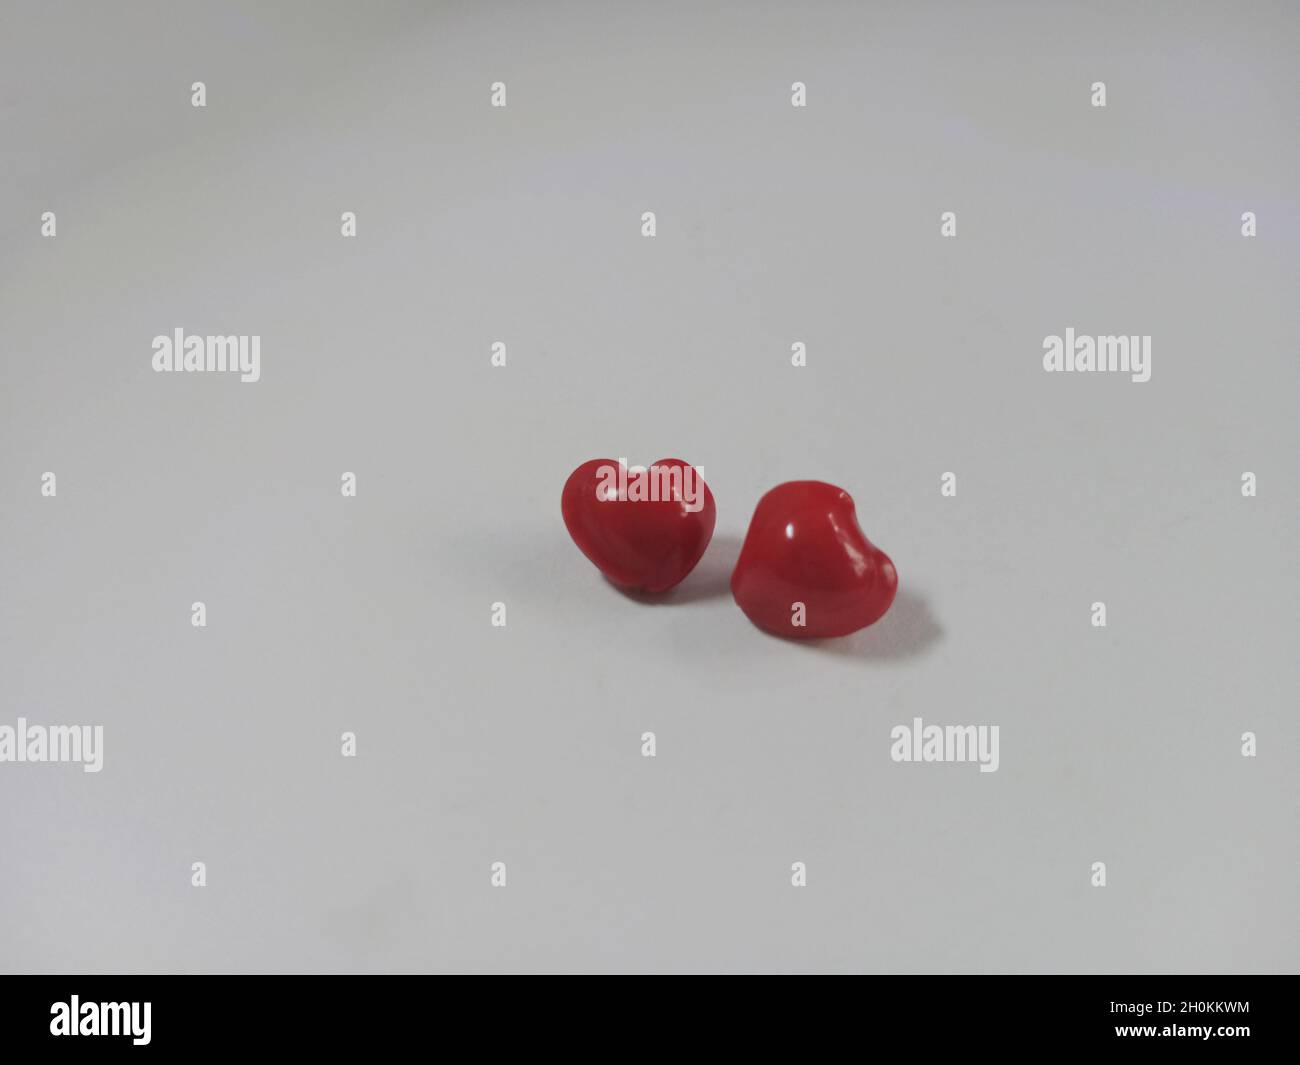 red heart shape saga seeds Stock Photo